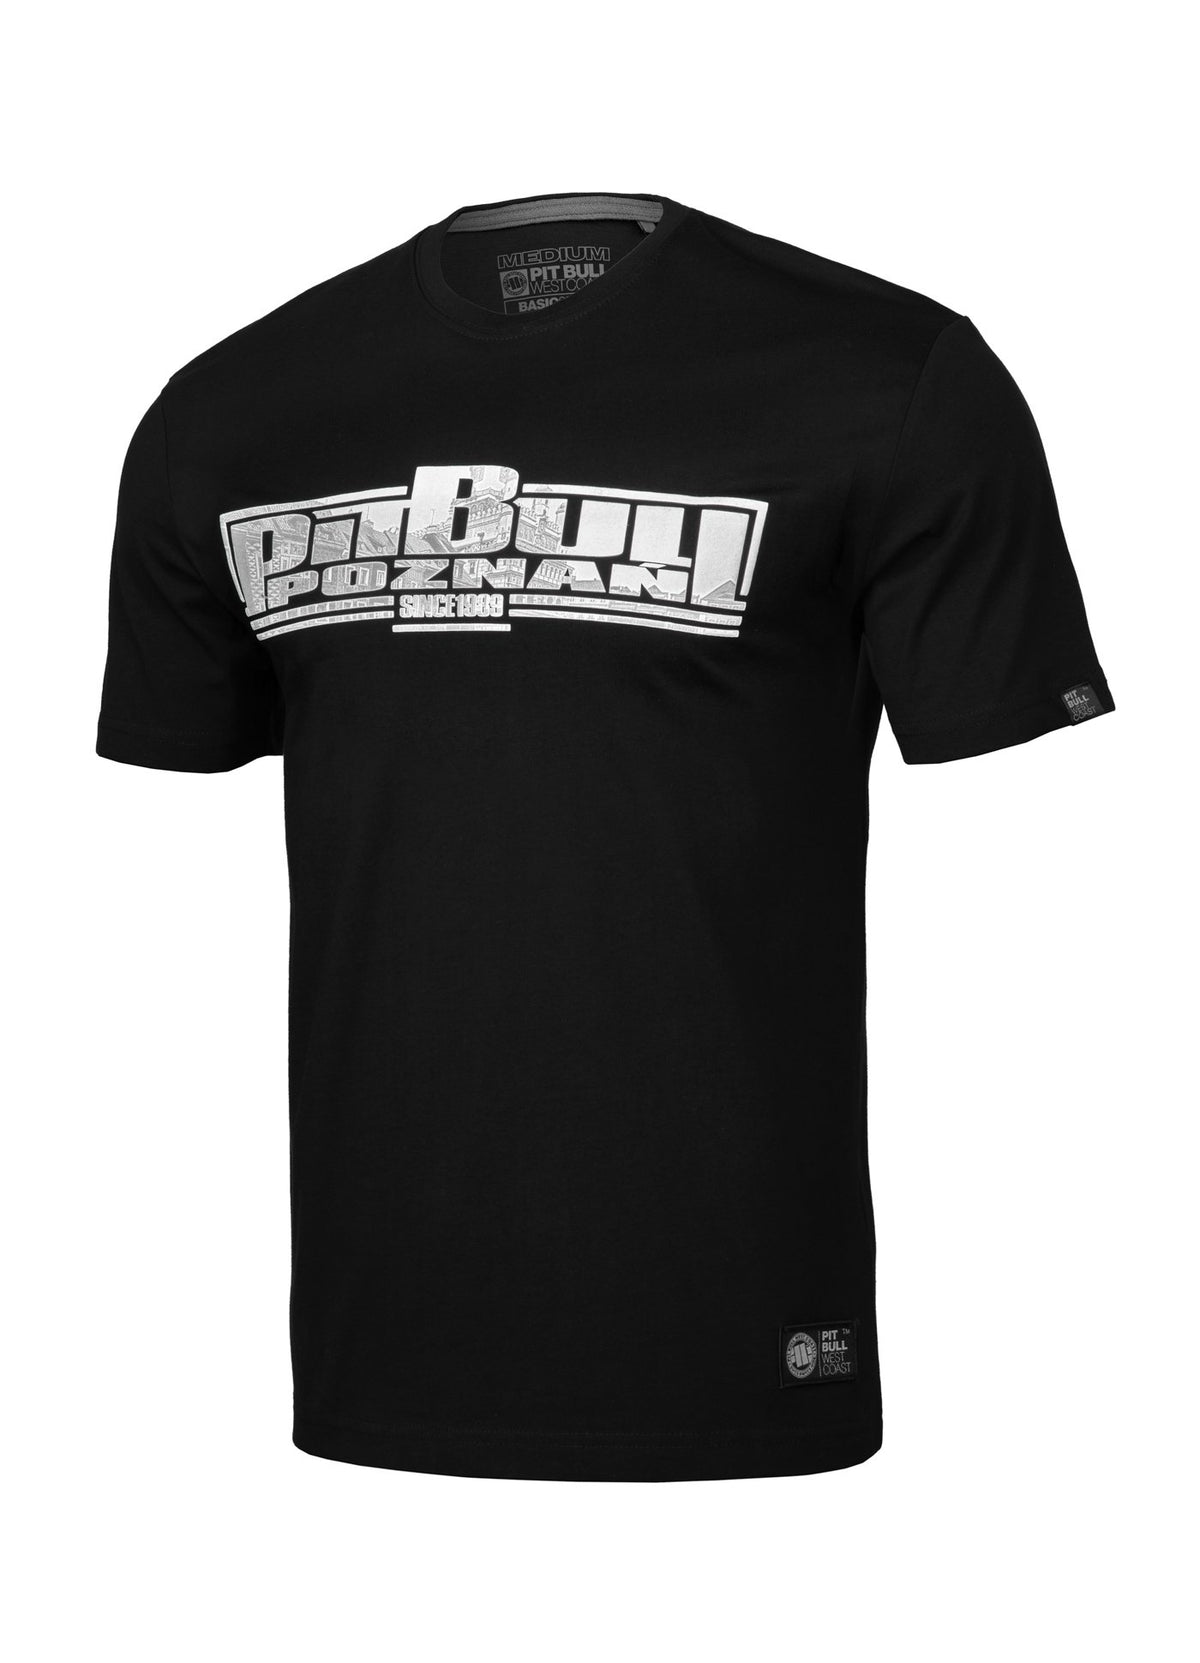 T-shirt CLASSIC BOXING POZNAŃ Black - Pitbull West Coast U.S.A. 